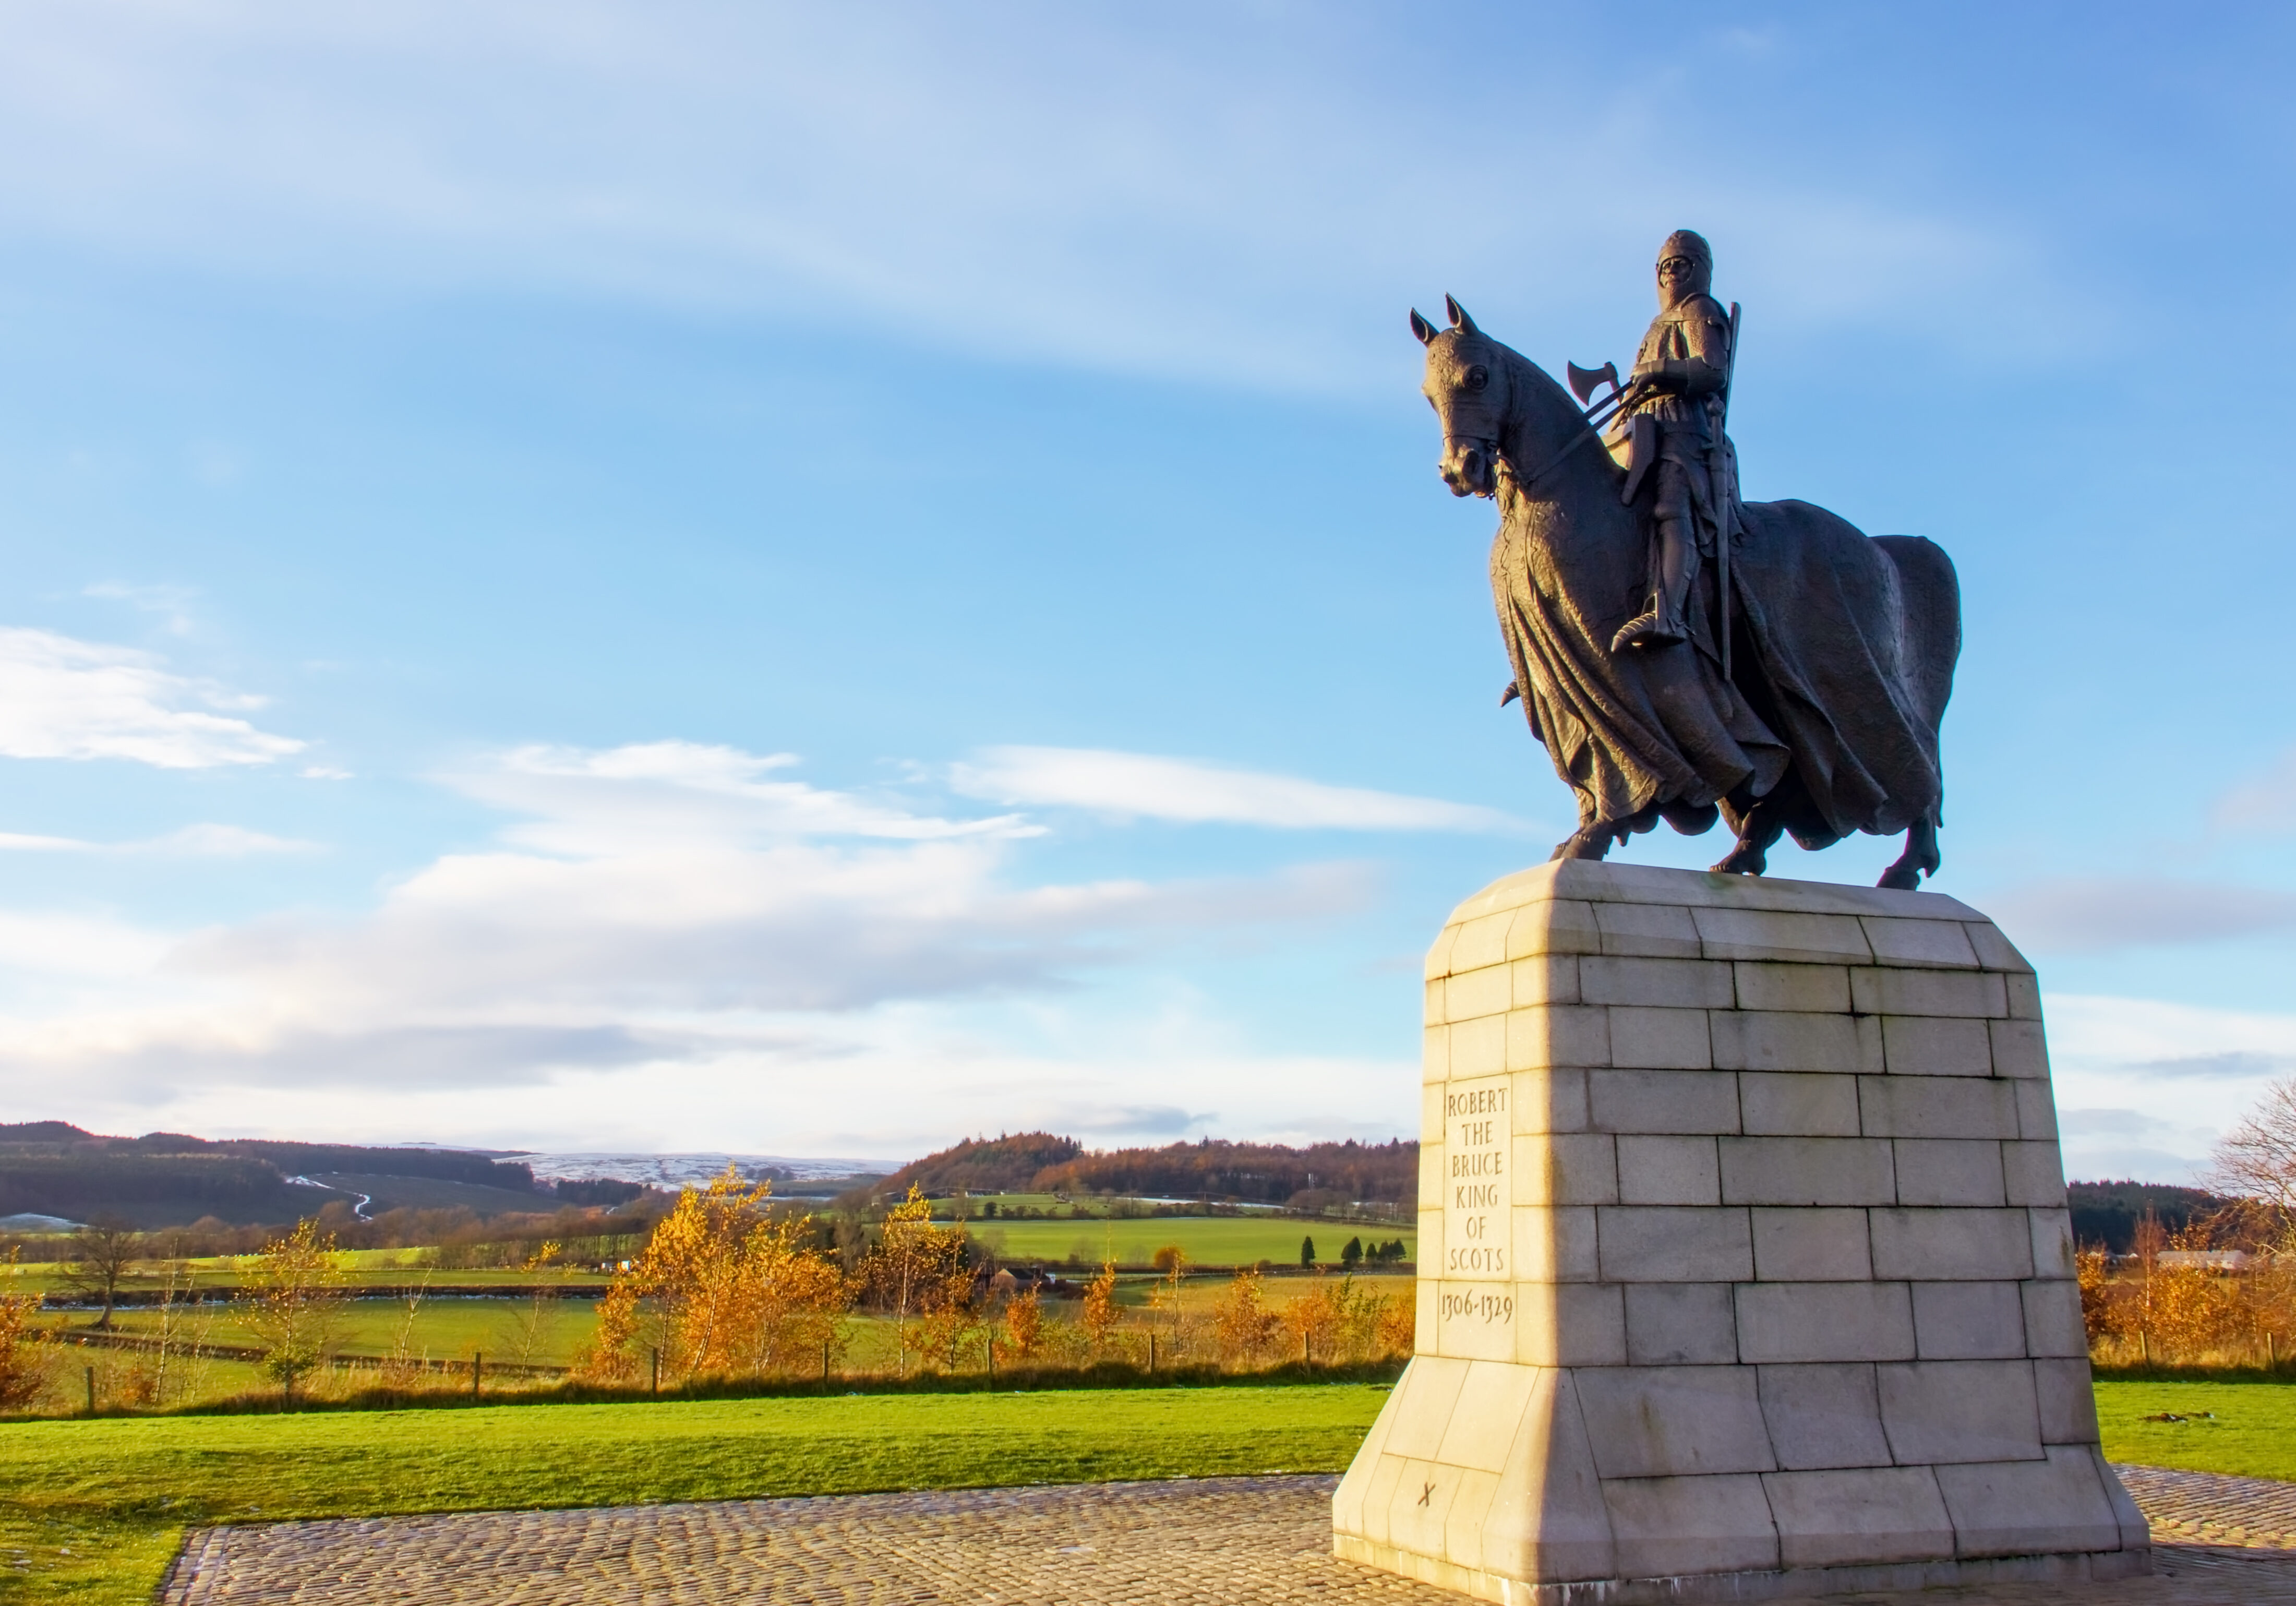 The Robert the Bruce statue at the site of the Battle of Bannockburn (Photo: Treasure Galore/Shutterstock)